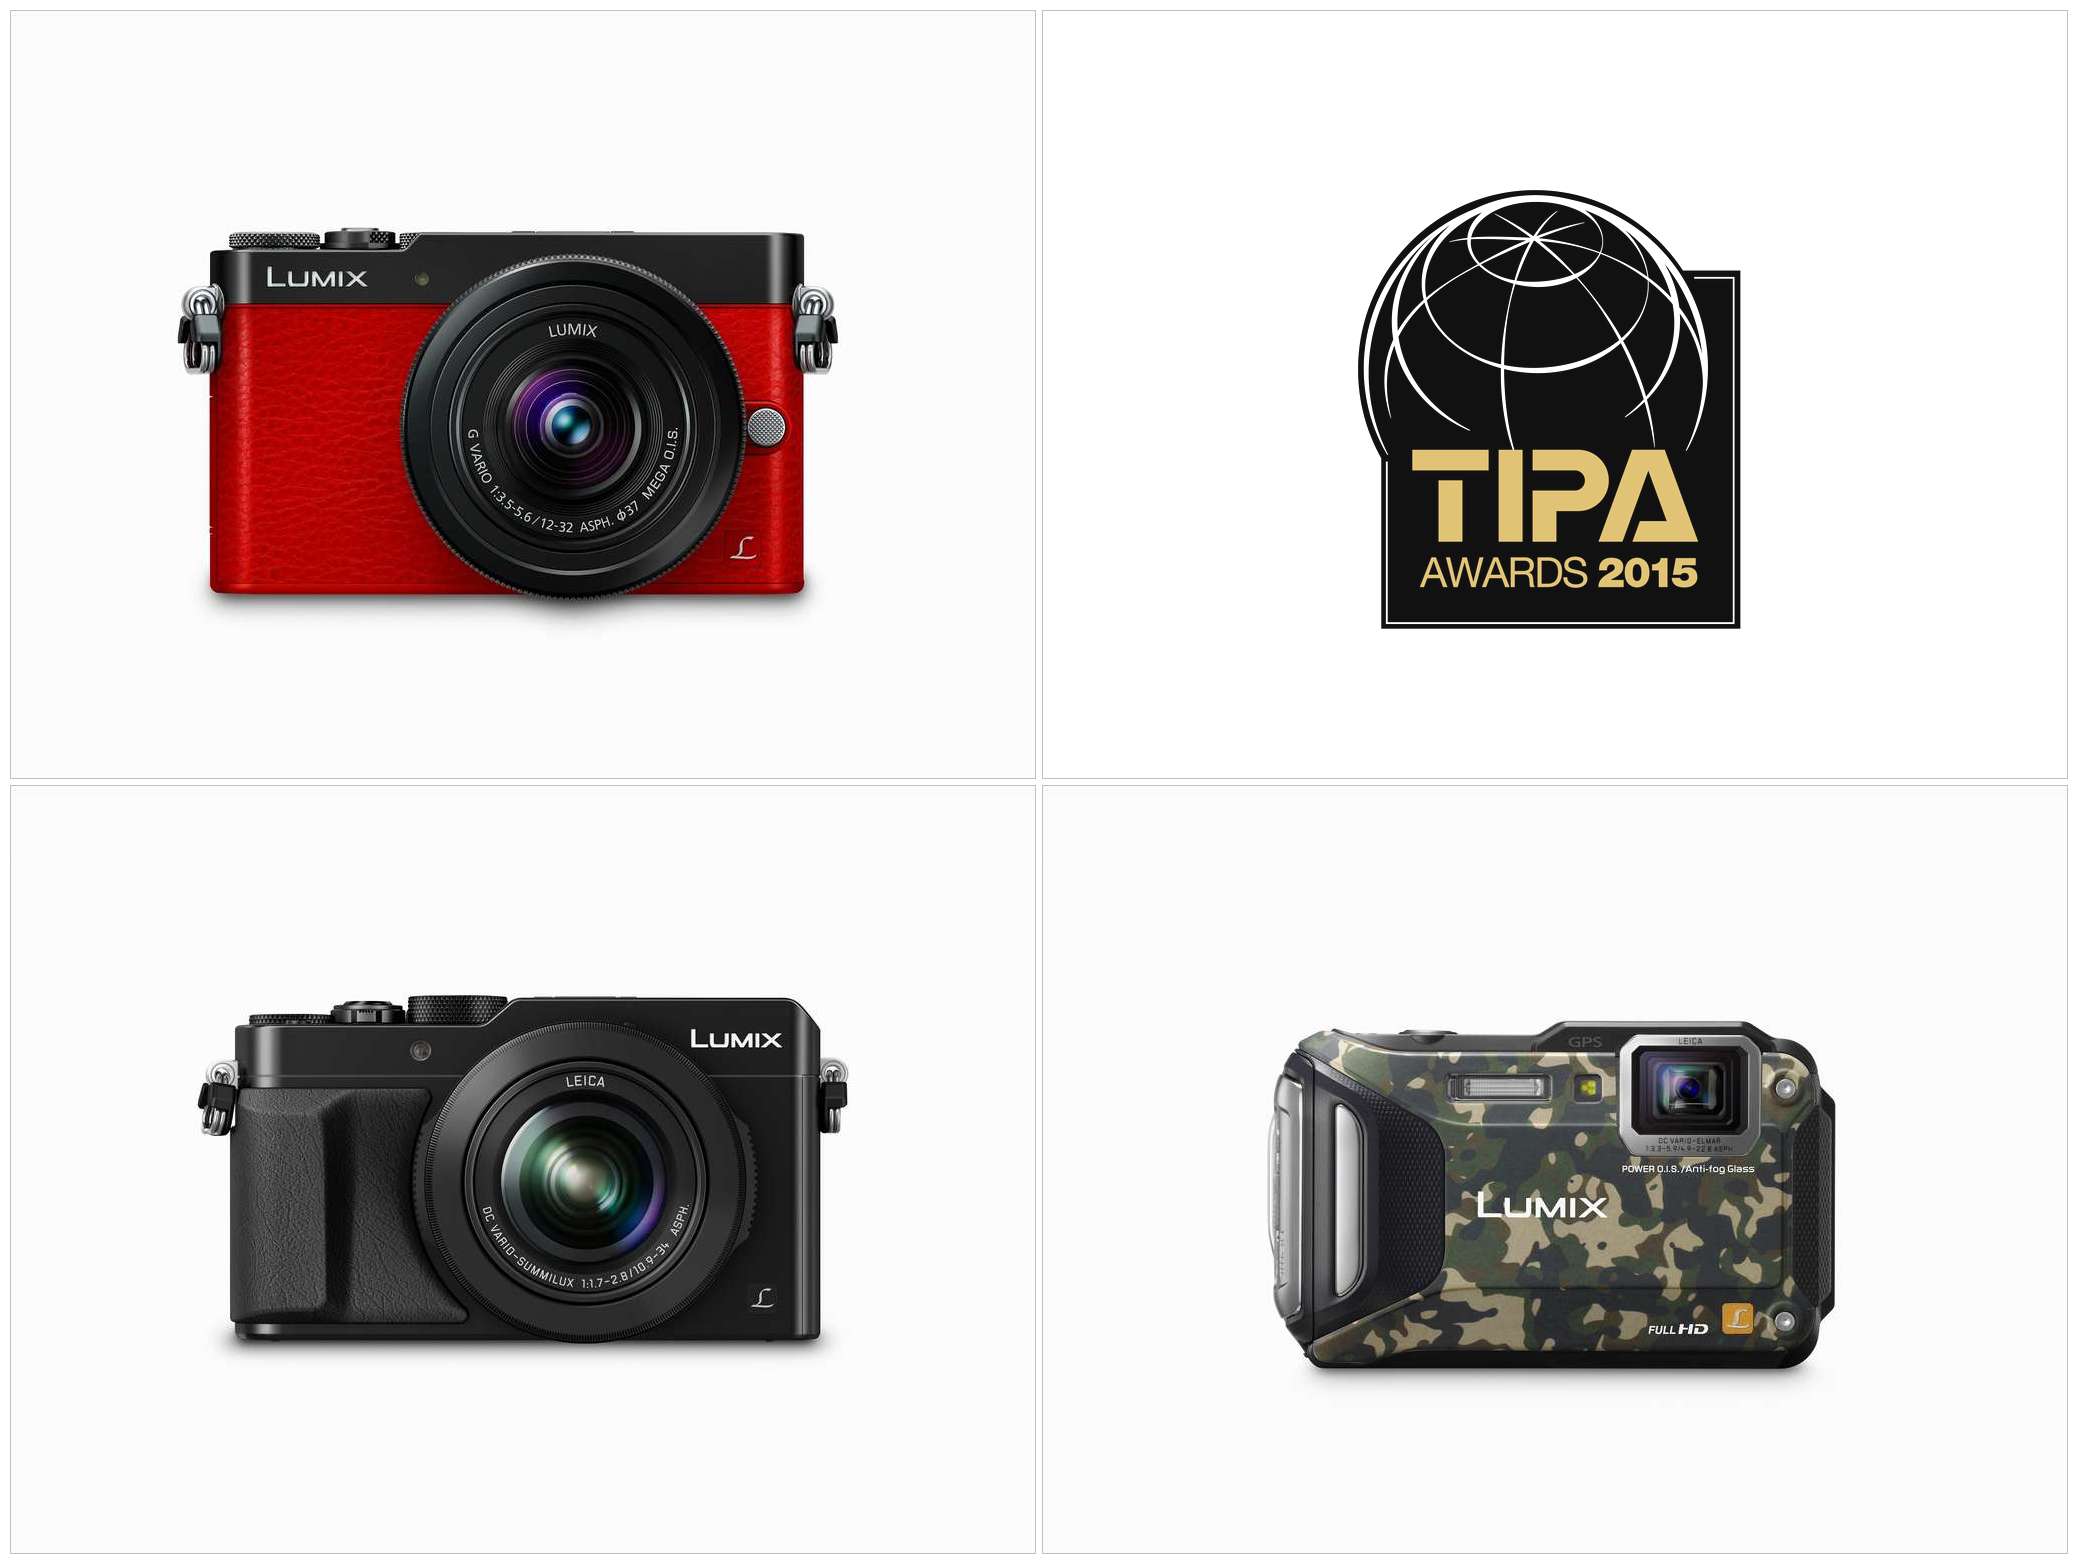 opraken zuiverheid seksueel Panasonic's LUMIX DMC-GM5 / DMC-LX100 / DMC-FT6(TS6) Cameras Awarded  Prestigious 2015 TIPA Awards | Awards/Recognition | Company | Blog Posts |  Panasonic Newsroom Global